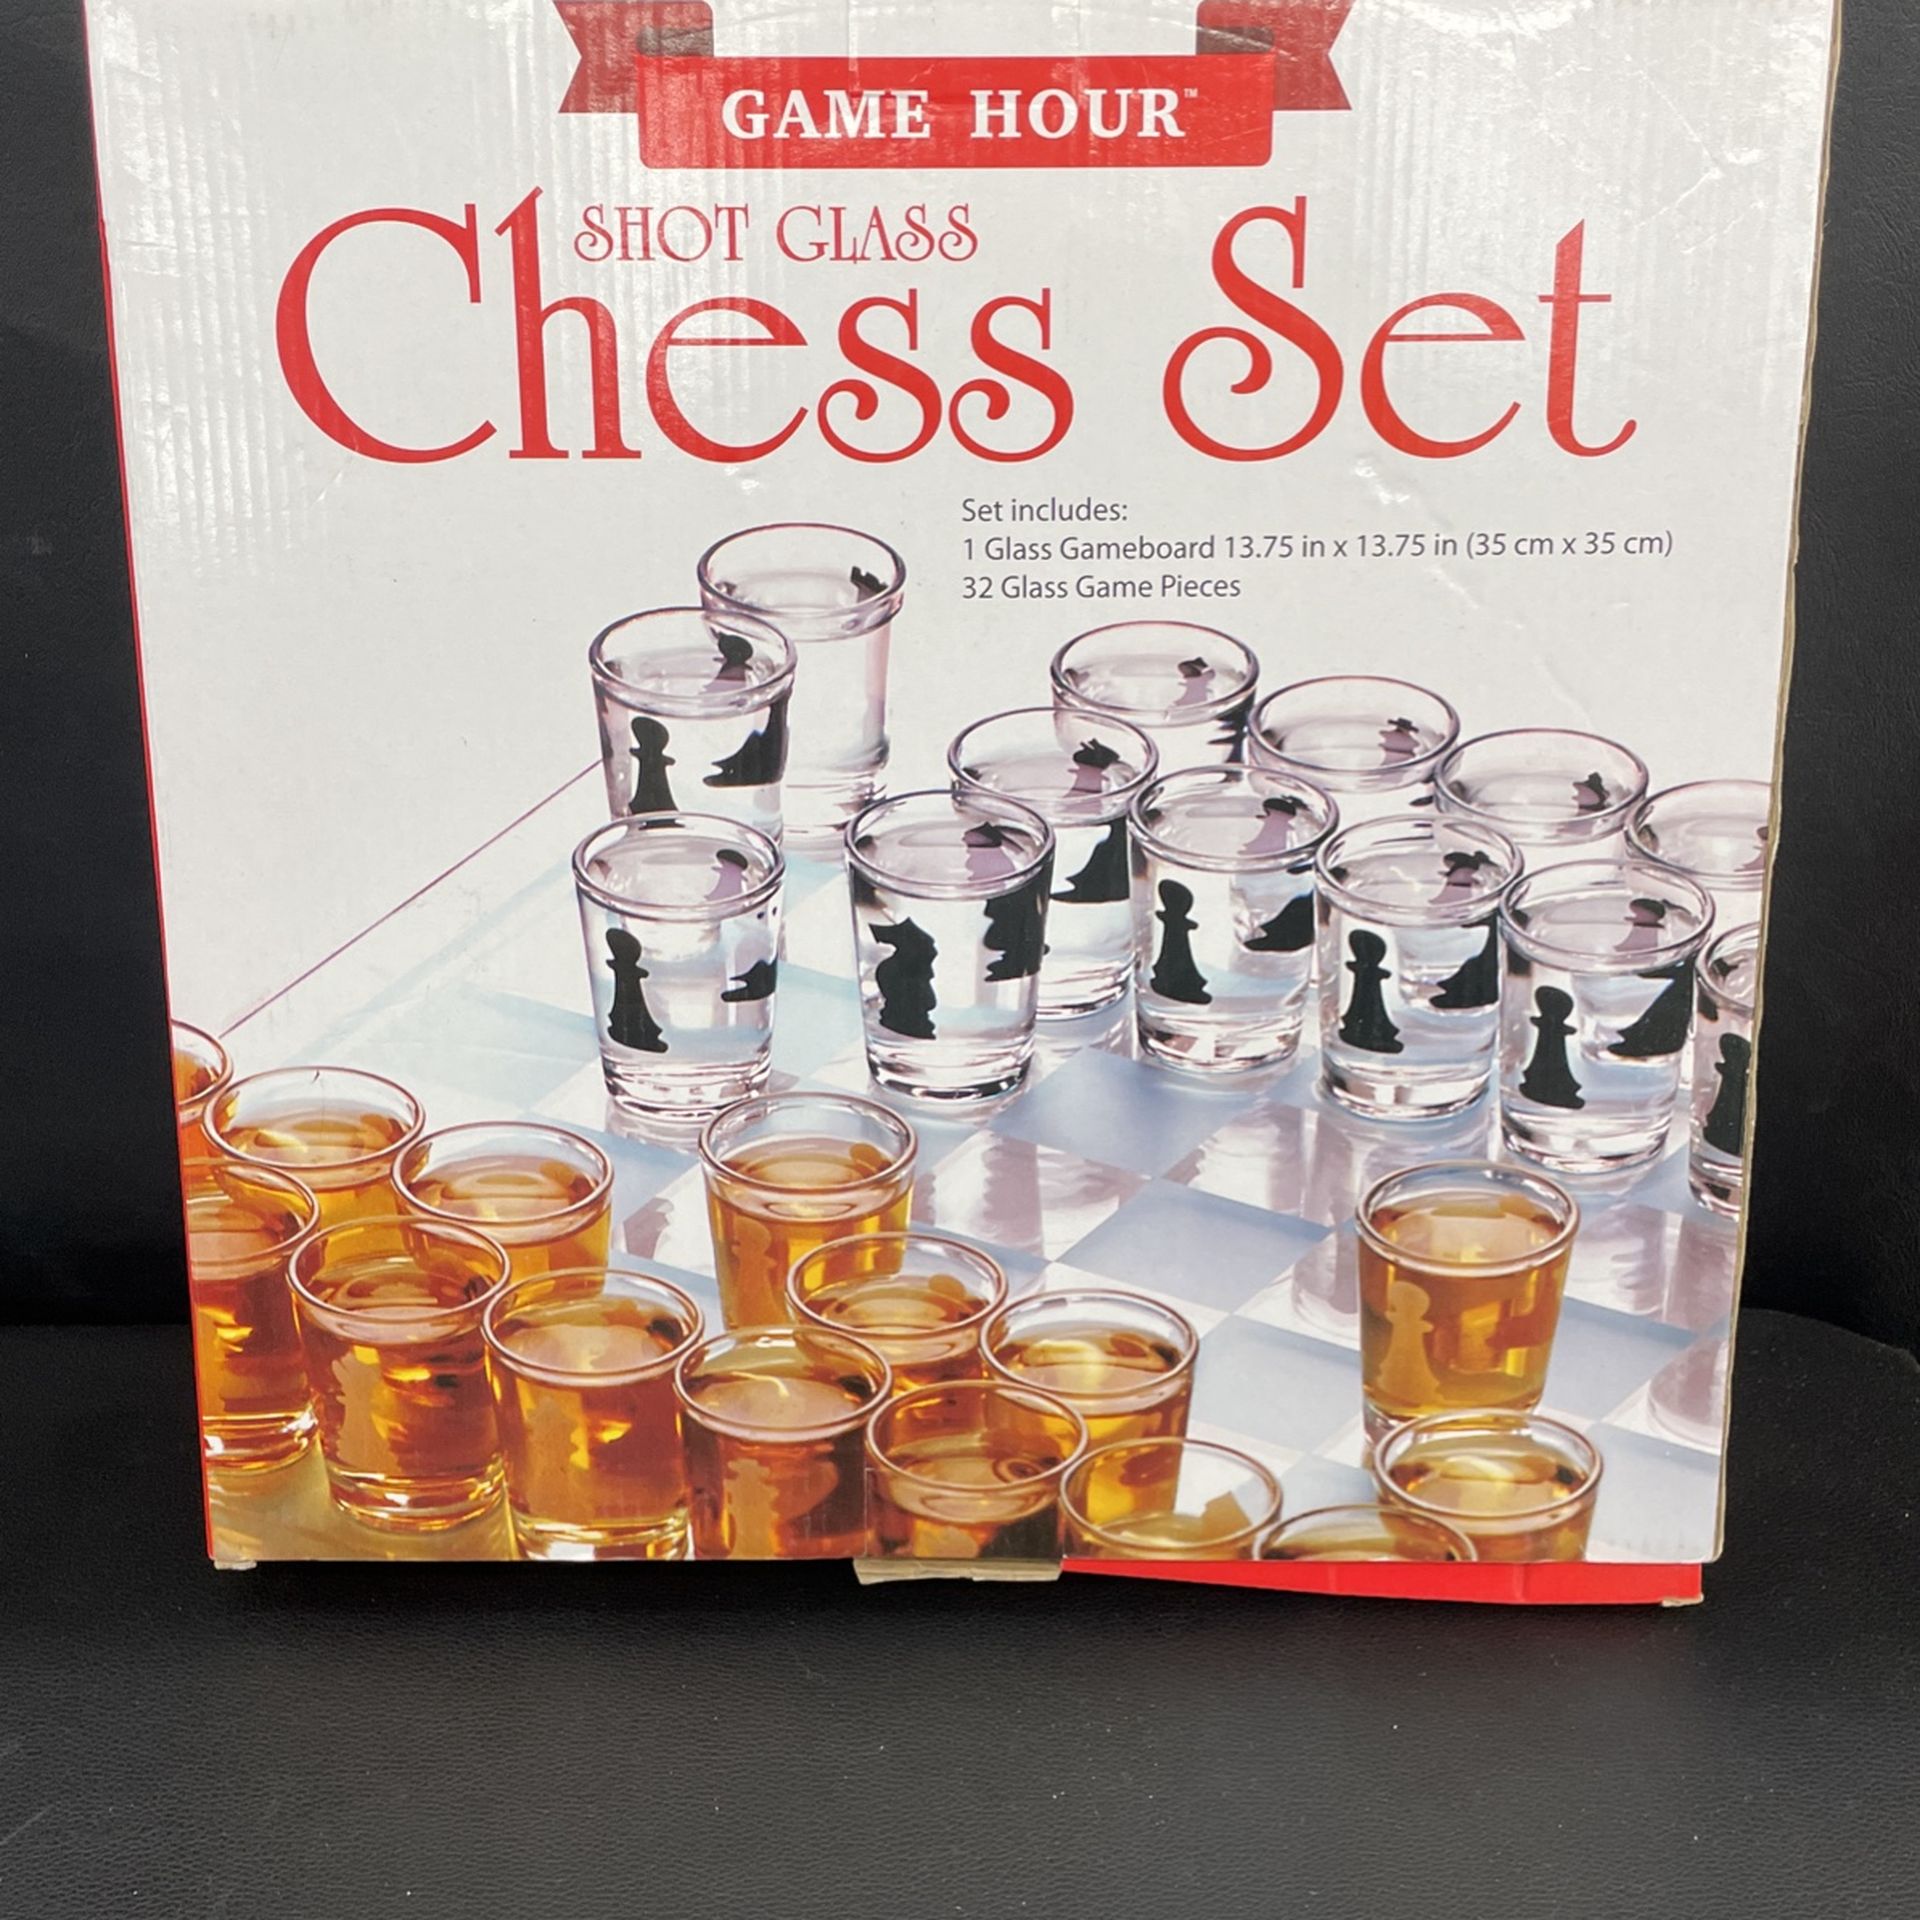 Shot Glass Chess Set. Item No 173 (Shopgoodwill)